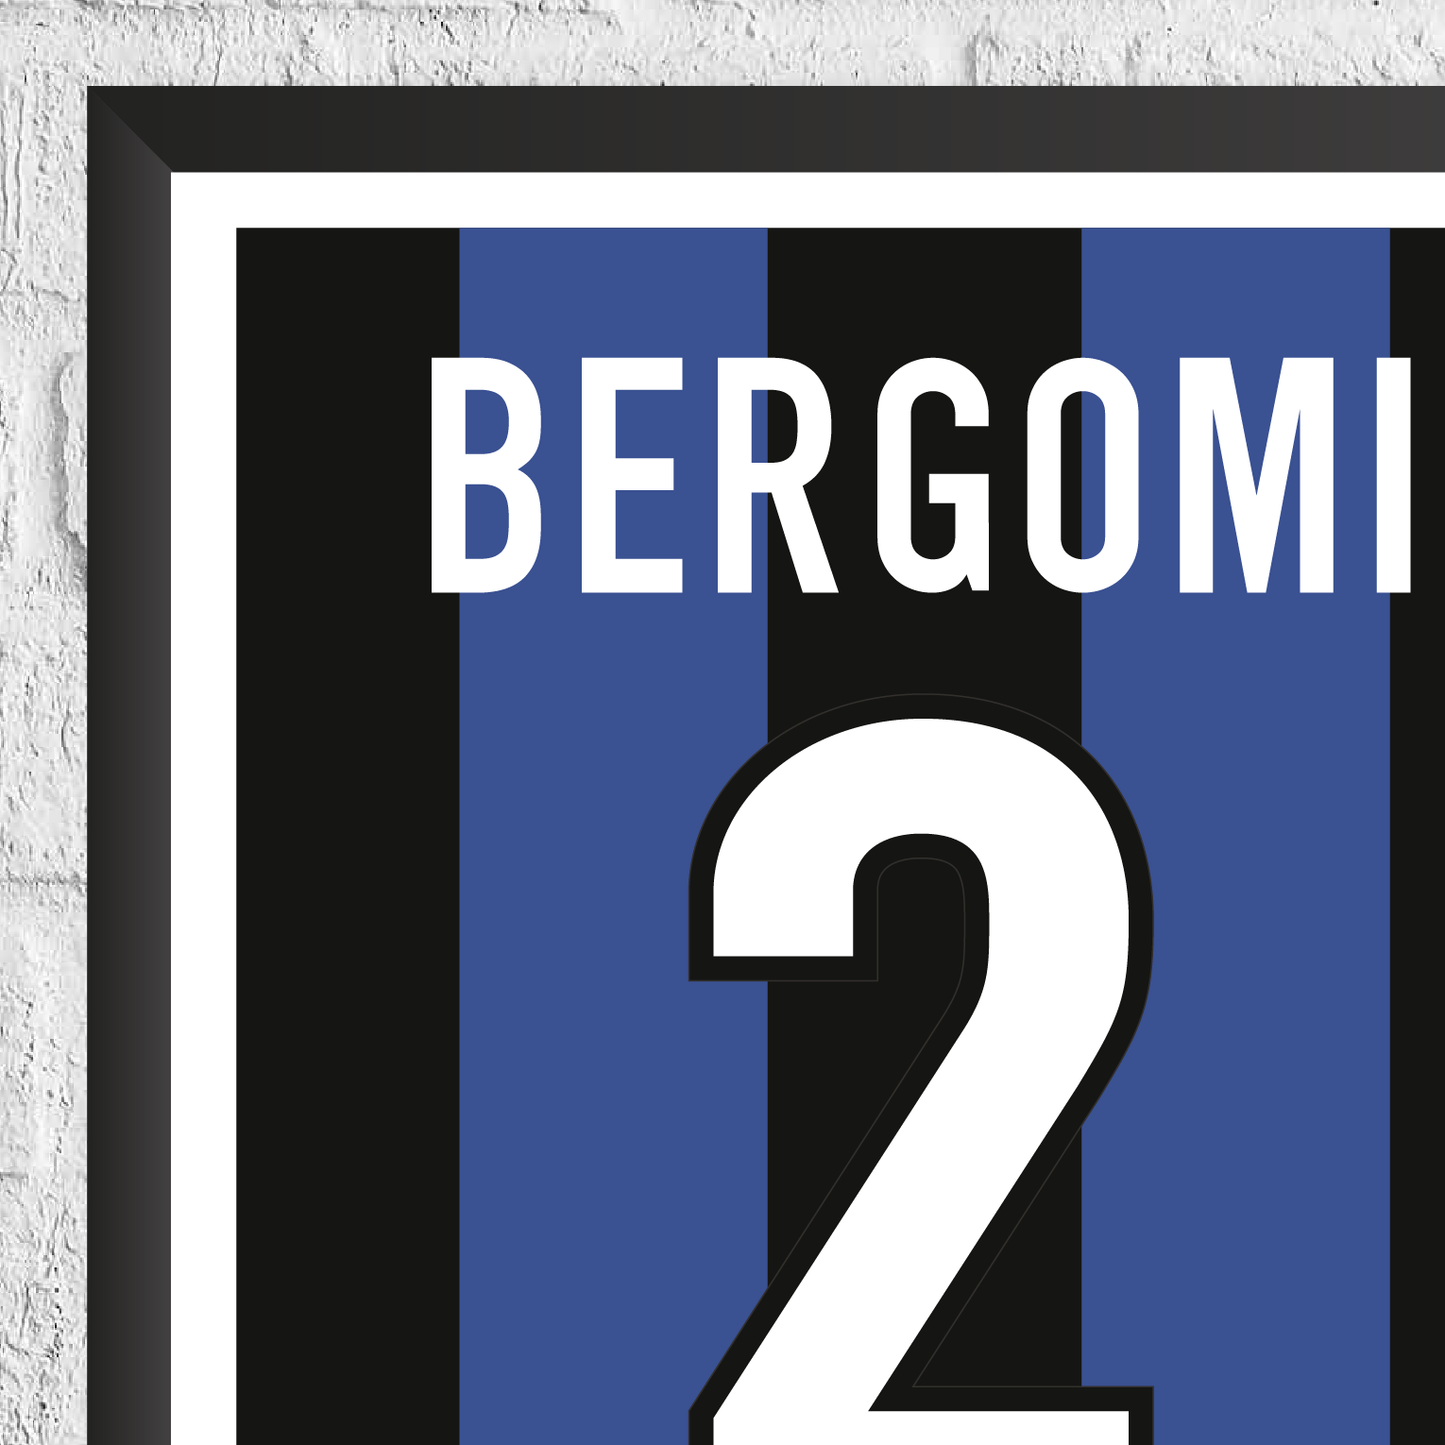 Giuseppe Bergomi Inter Milan Legend Stats Print